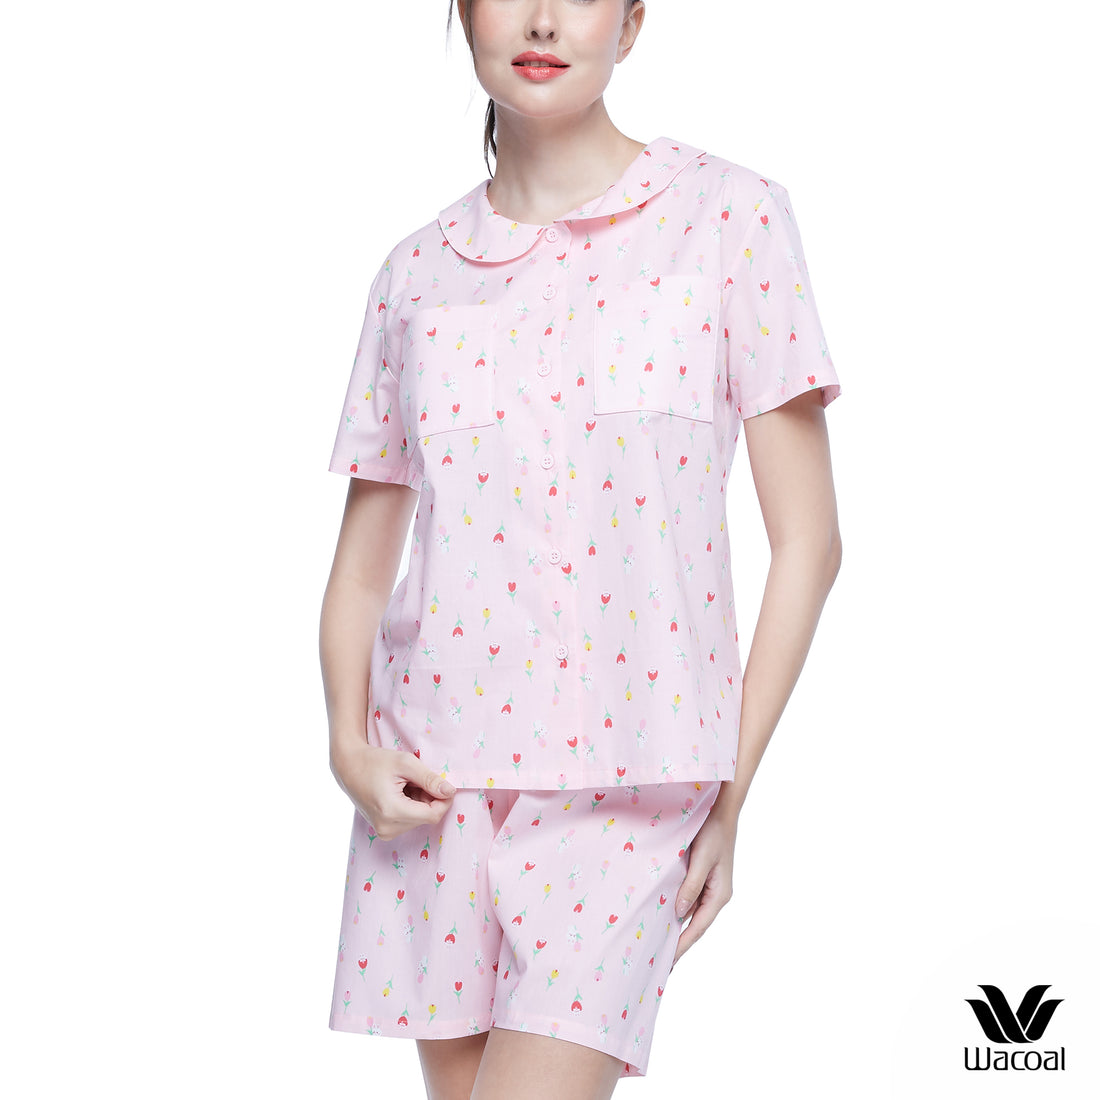 Wacoal Sleepwear, Wacoal pajamas, Hawaiian collar shirt, short sleeves/shorts, model WN9E01, pink (PR)